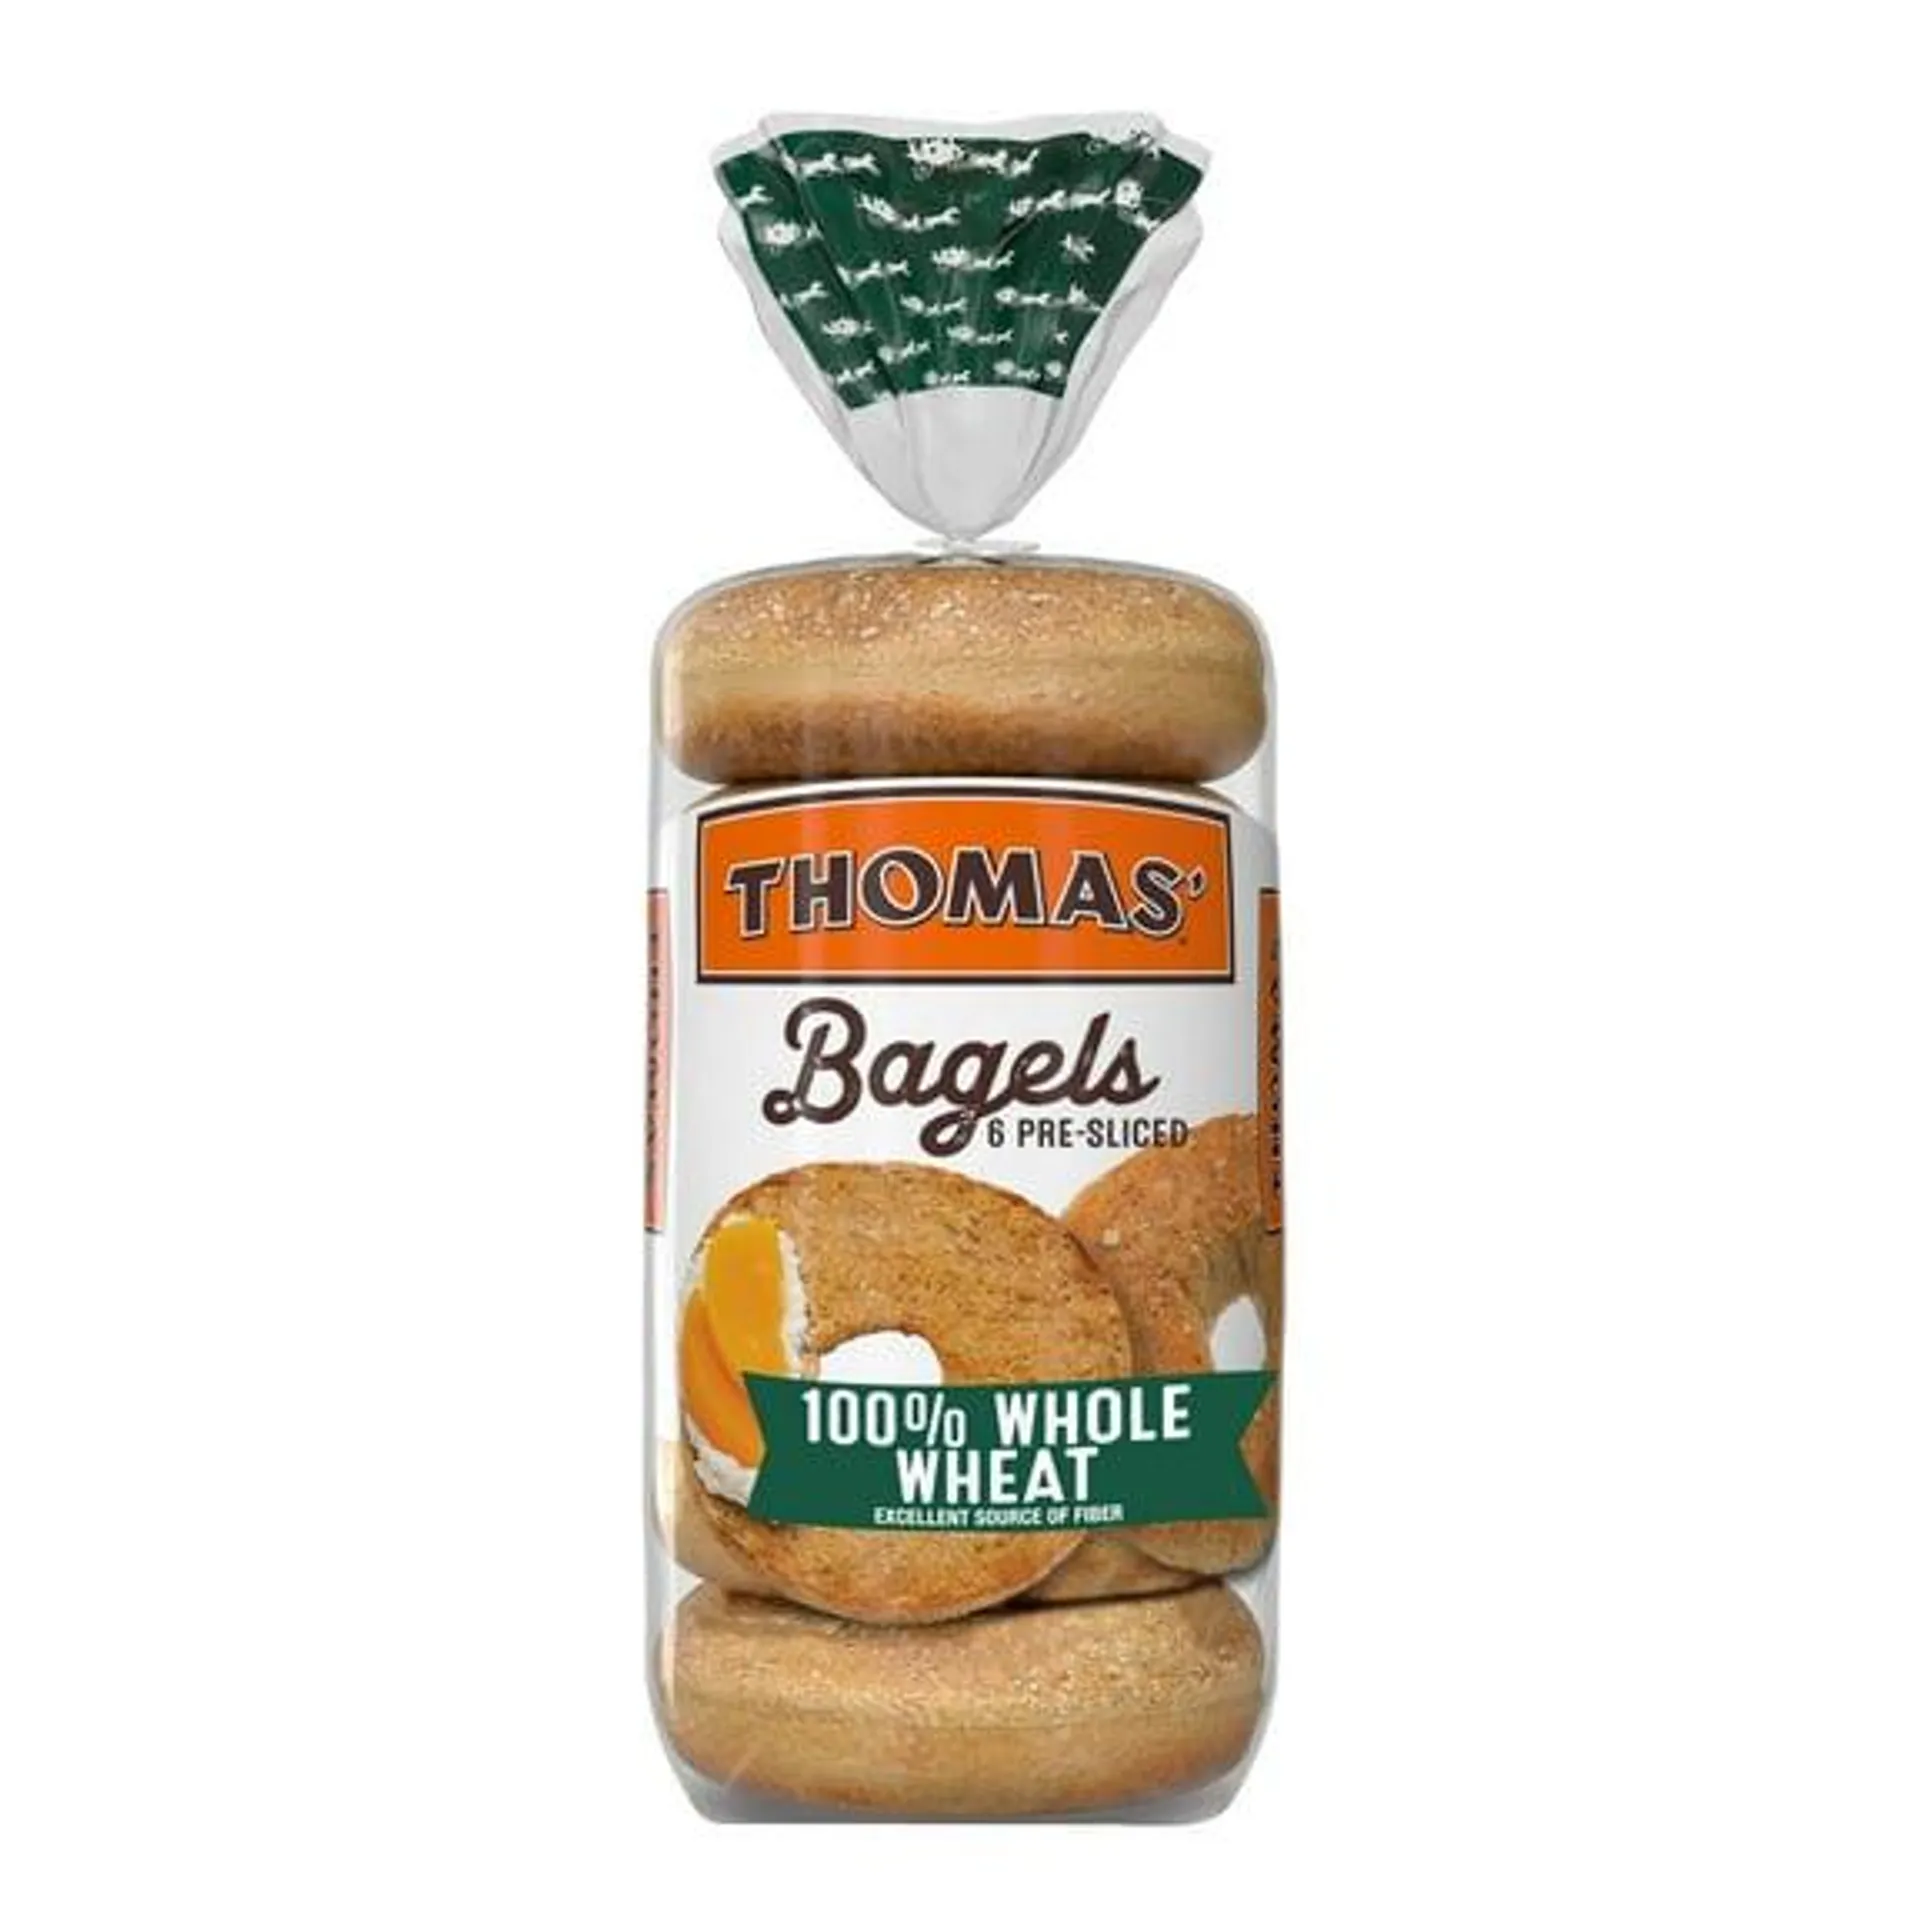 Thomas' 100% Whole Wheat Bagels, 6 Count, 20 oz Bag